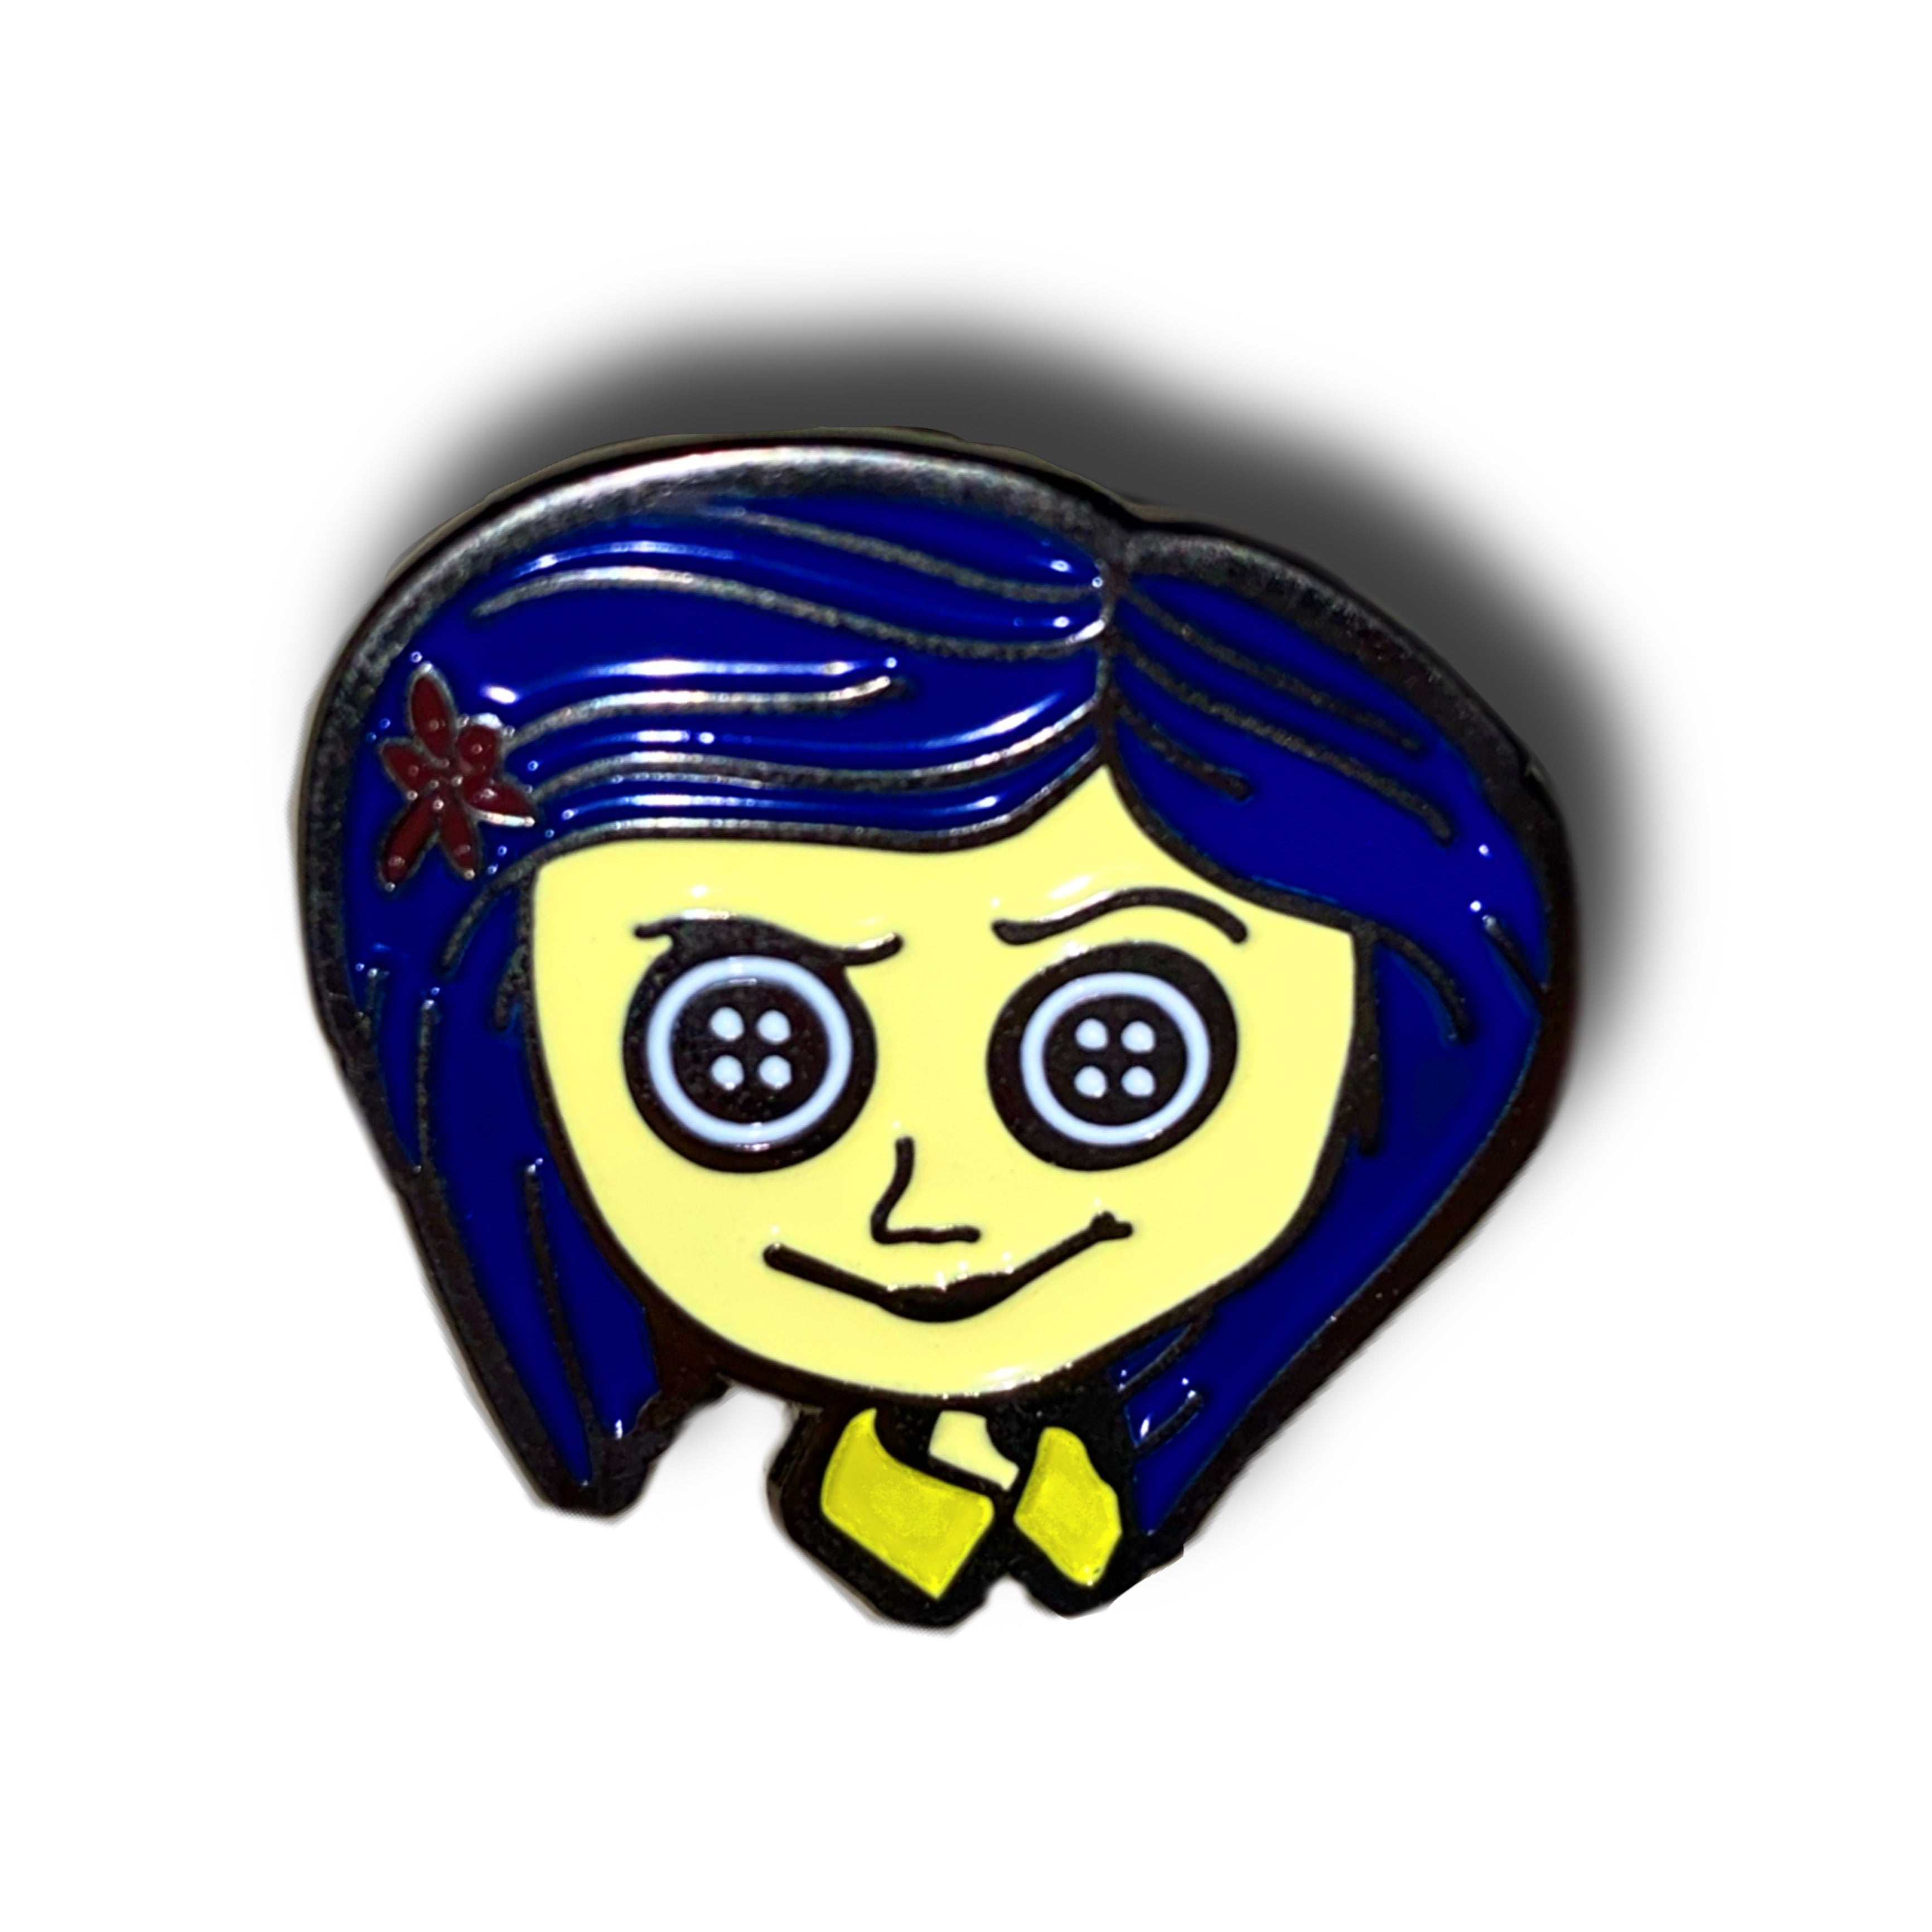 Coraline with Button Eyes Enamel Pin Badge